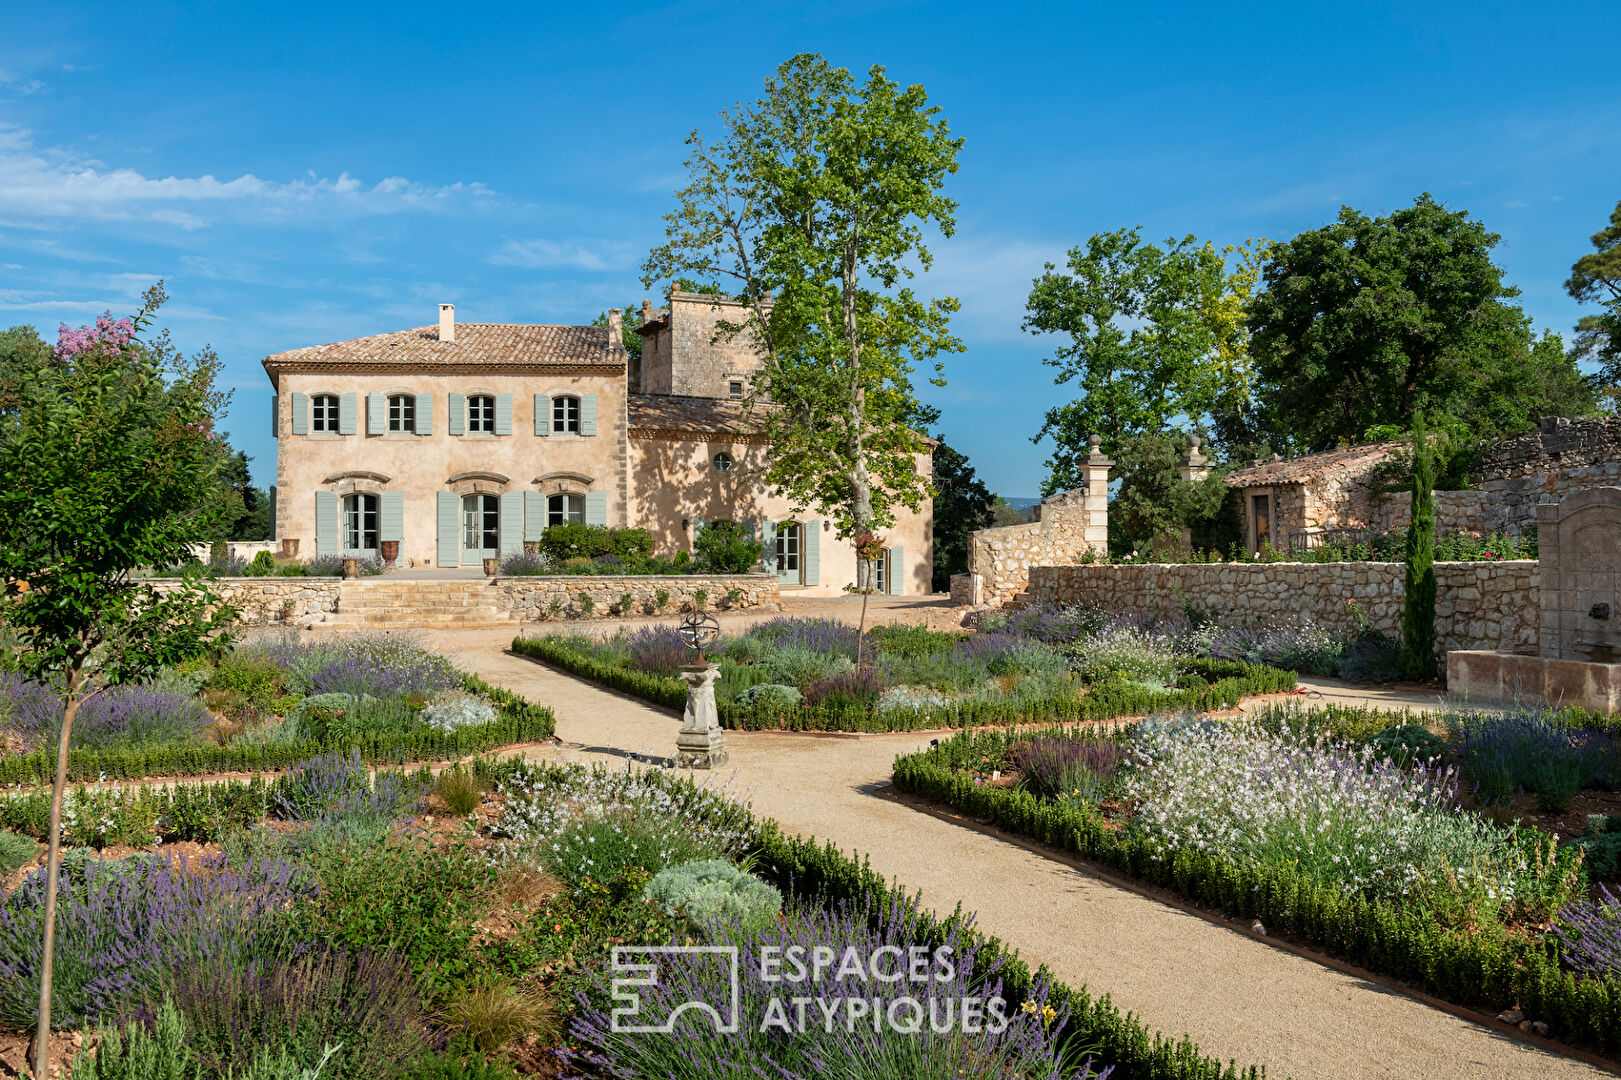 18th century Provençal bastide with garden